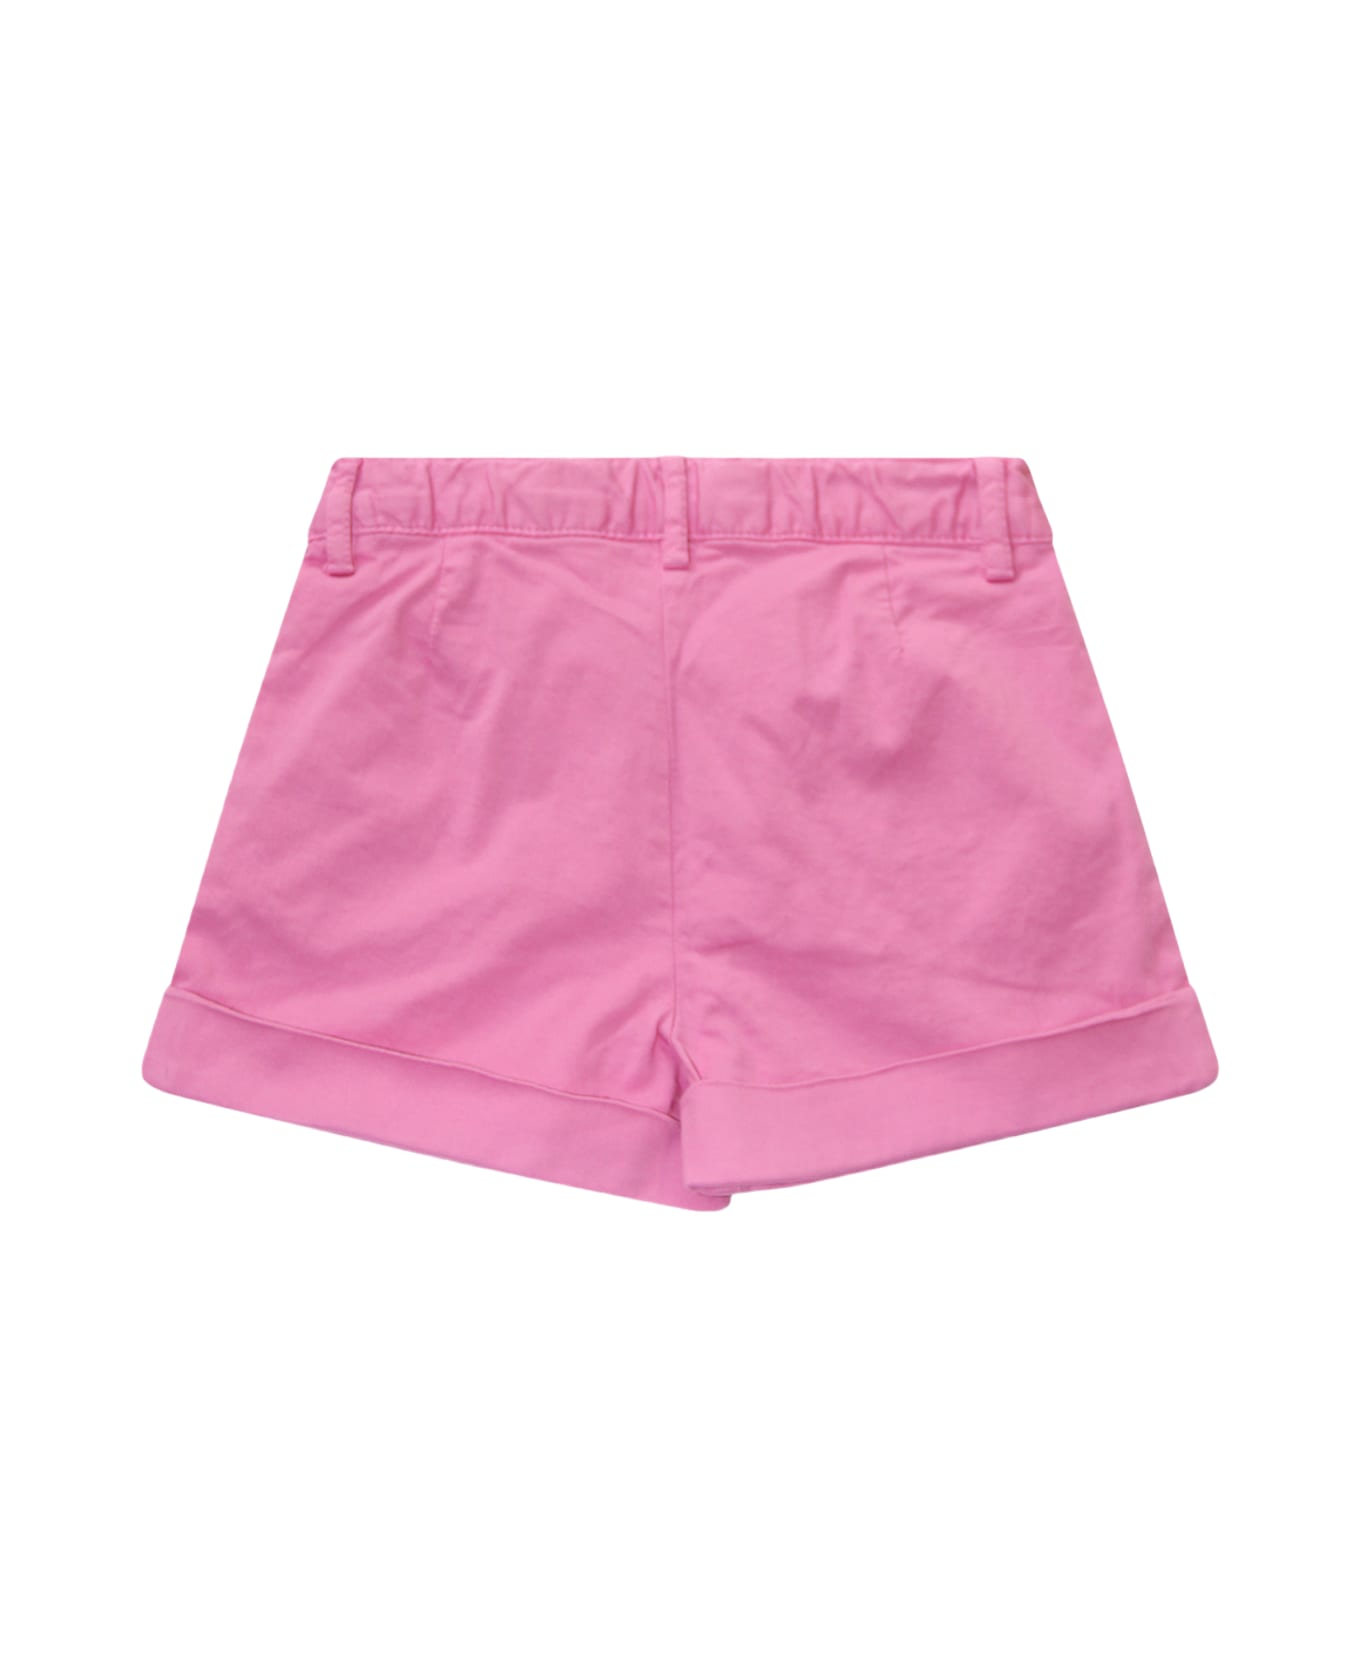 Il Gufo Bright Pink Cotton Shorts - ROSA CANINA ボトムス